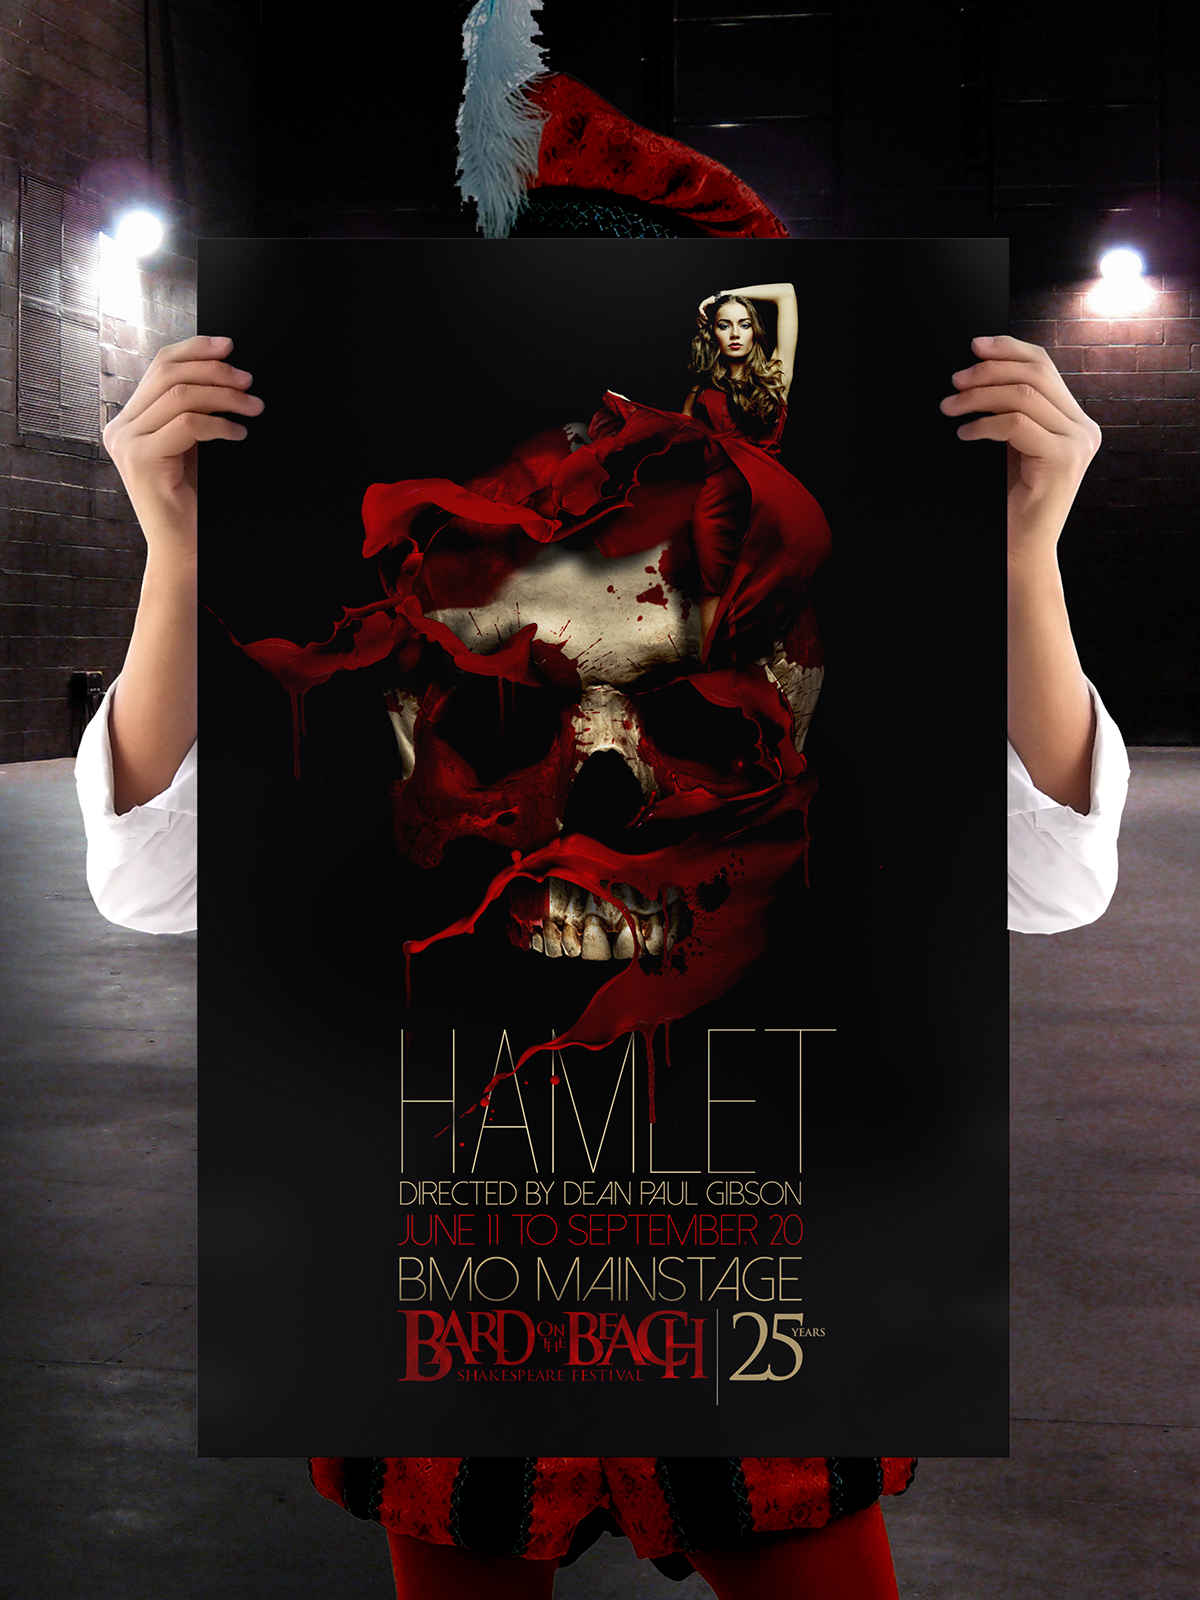 photoshop skull shakespeare Macbeth hamlet Romeo juliet william play manipulation globe theater 